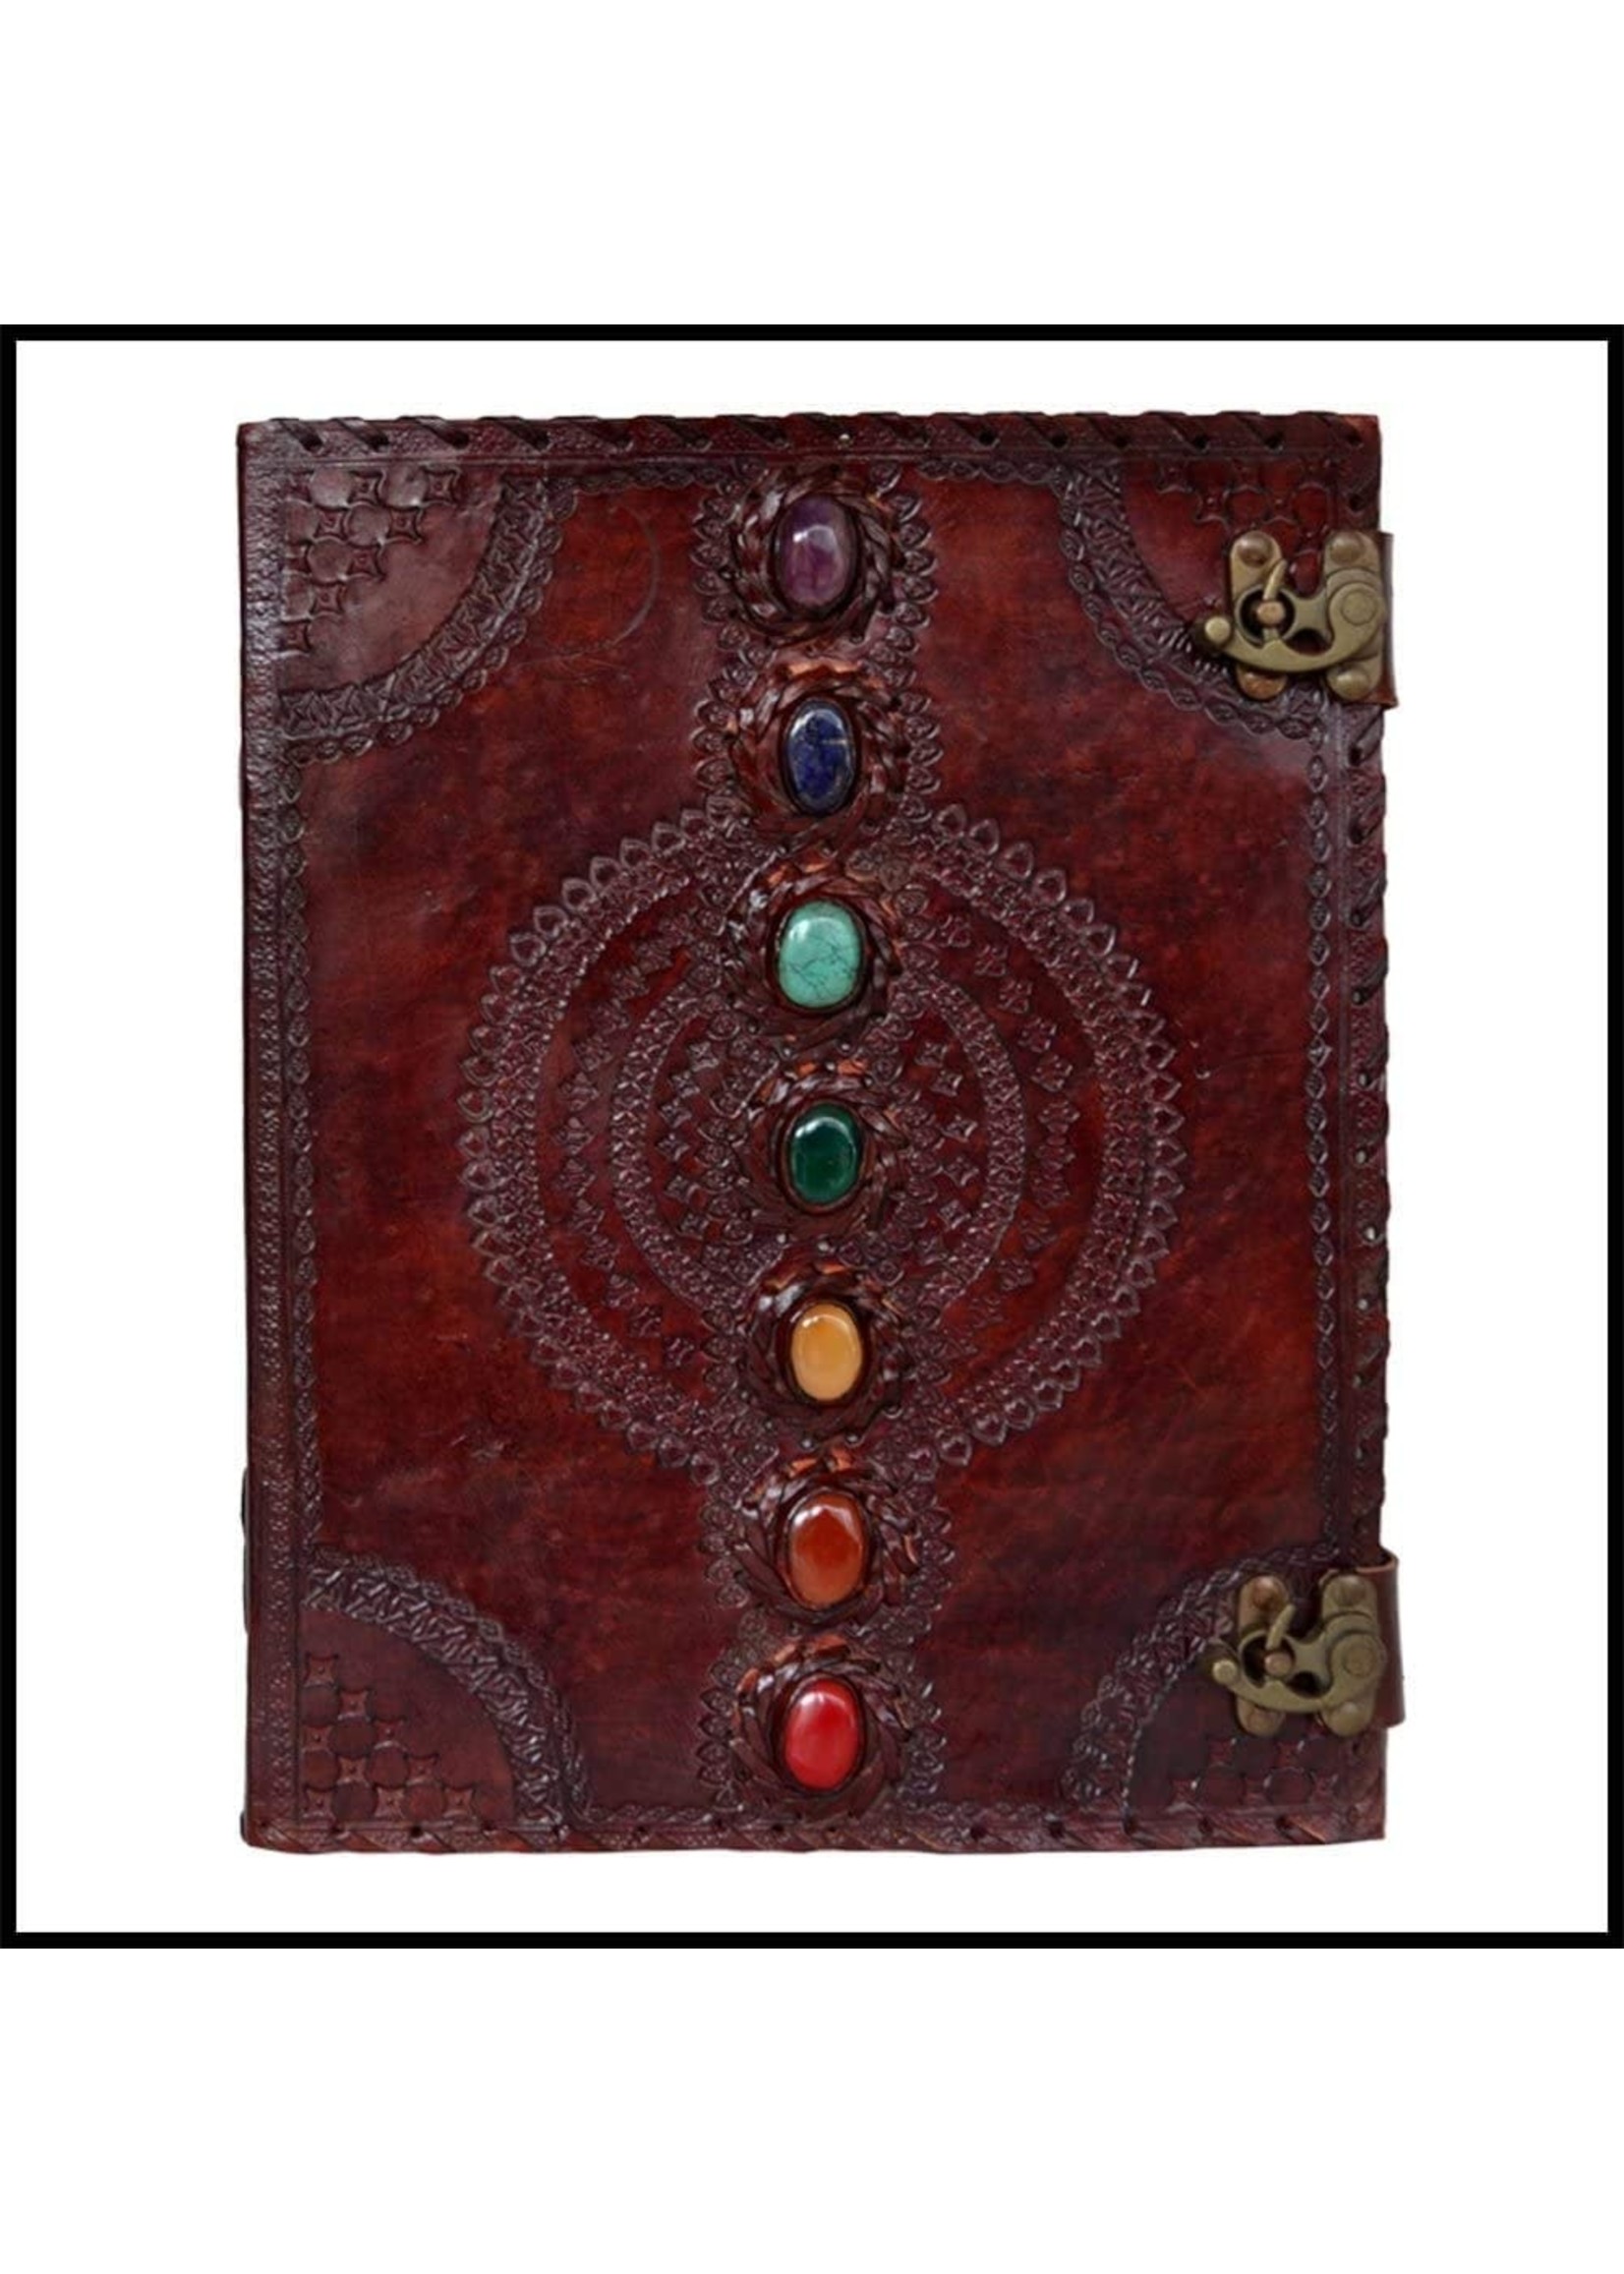 10"x7" Leather Seven Chakra Journal